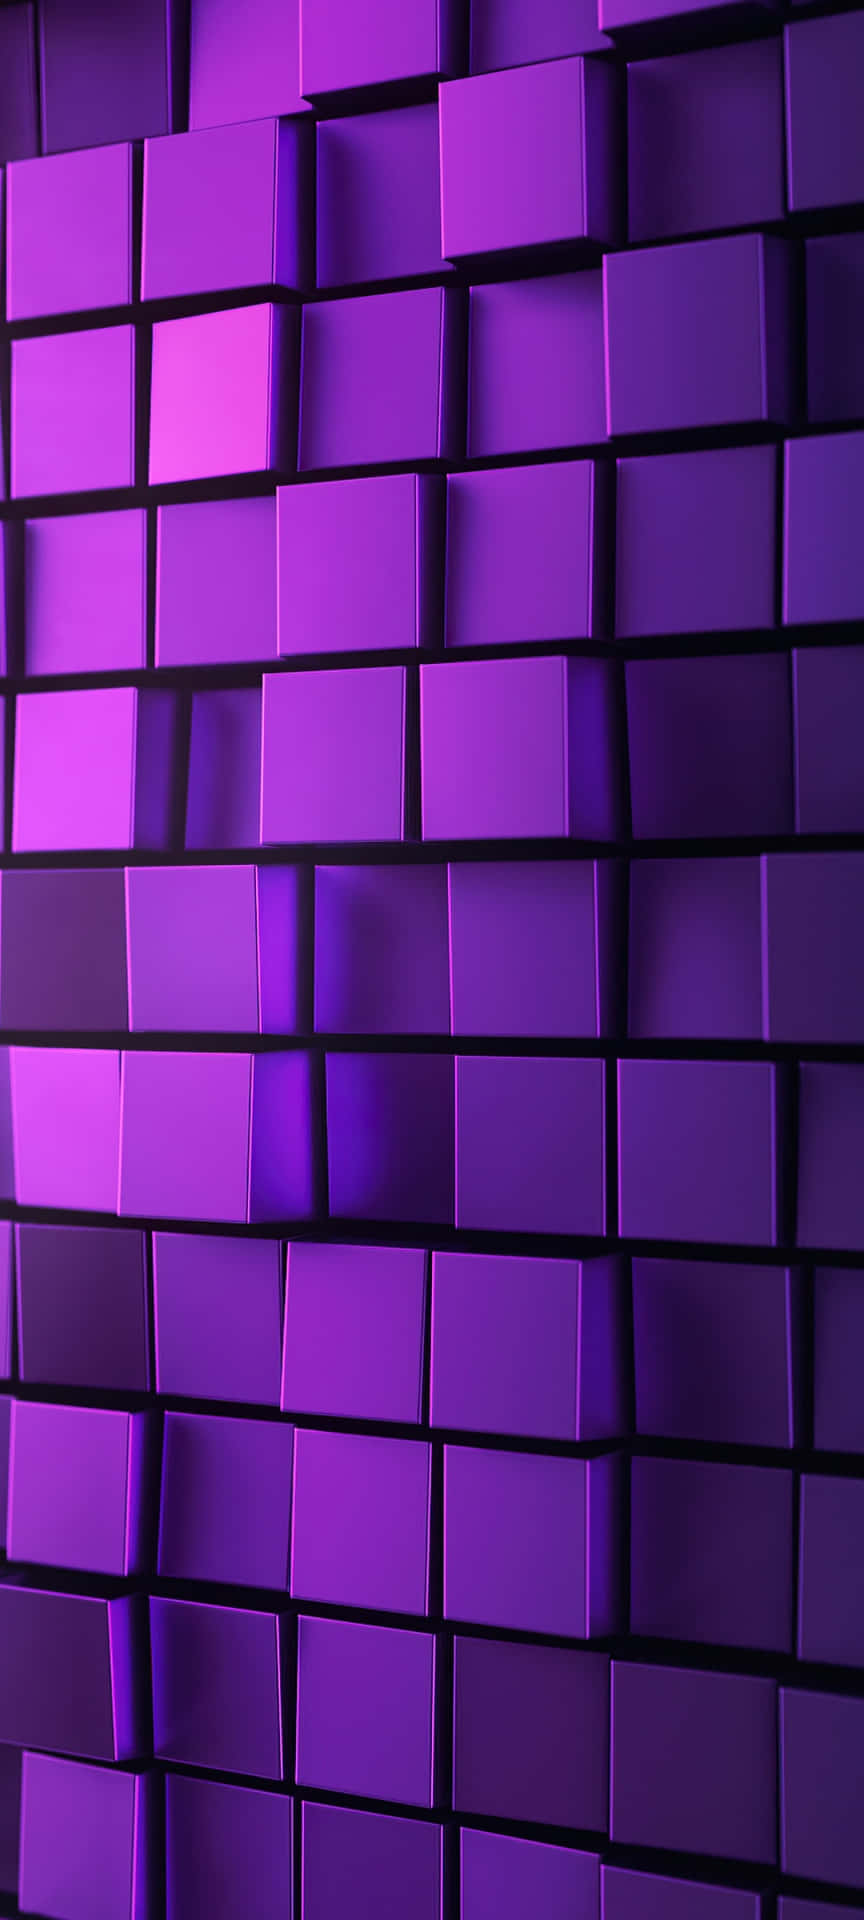 Super Cool 3d Purple Square Blocks